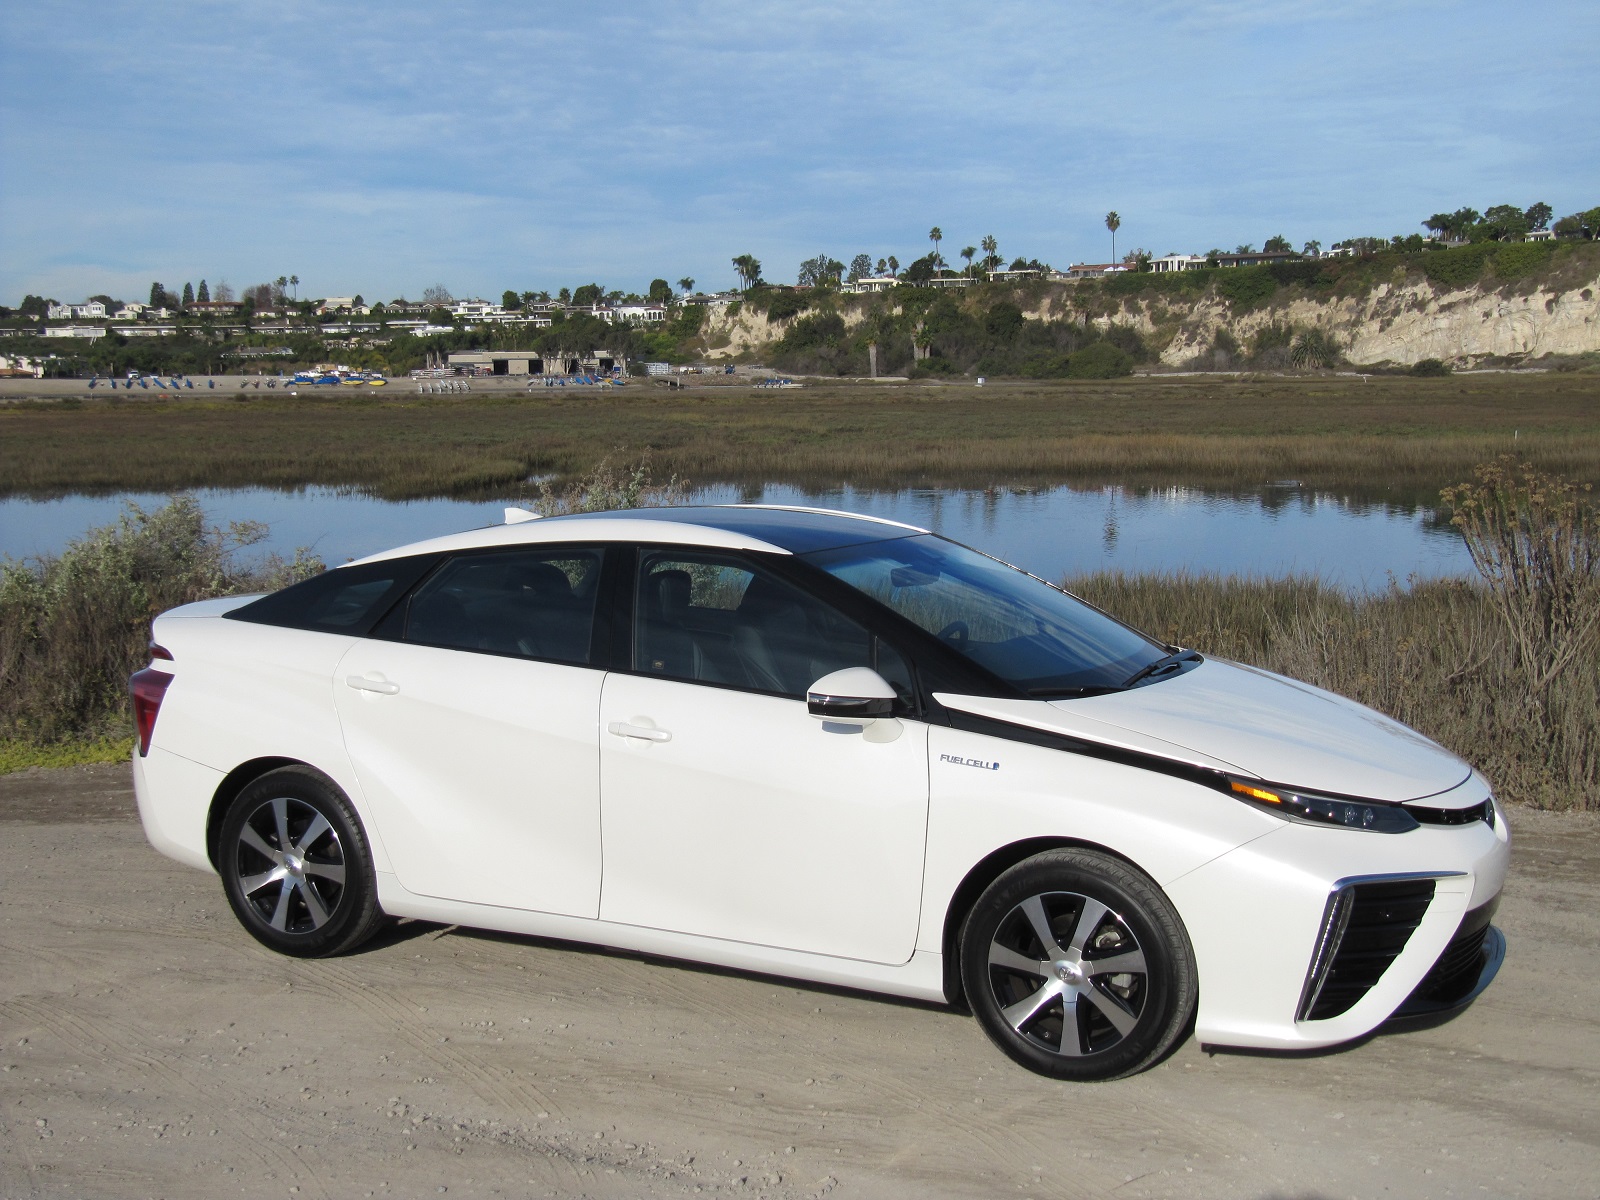 2016 toyota mirai hydrogen fuel cell car newport beach ca nov 2014_100490081_h